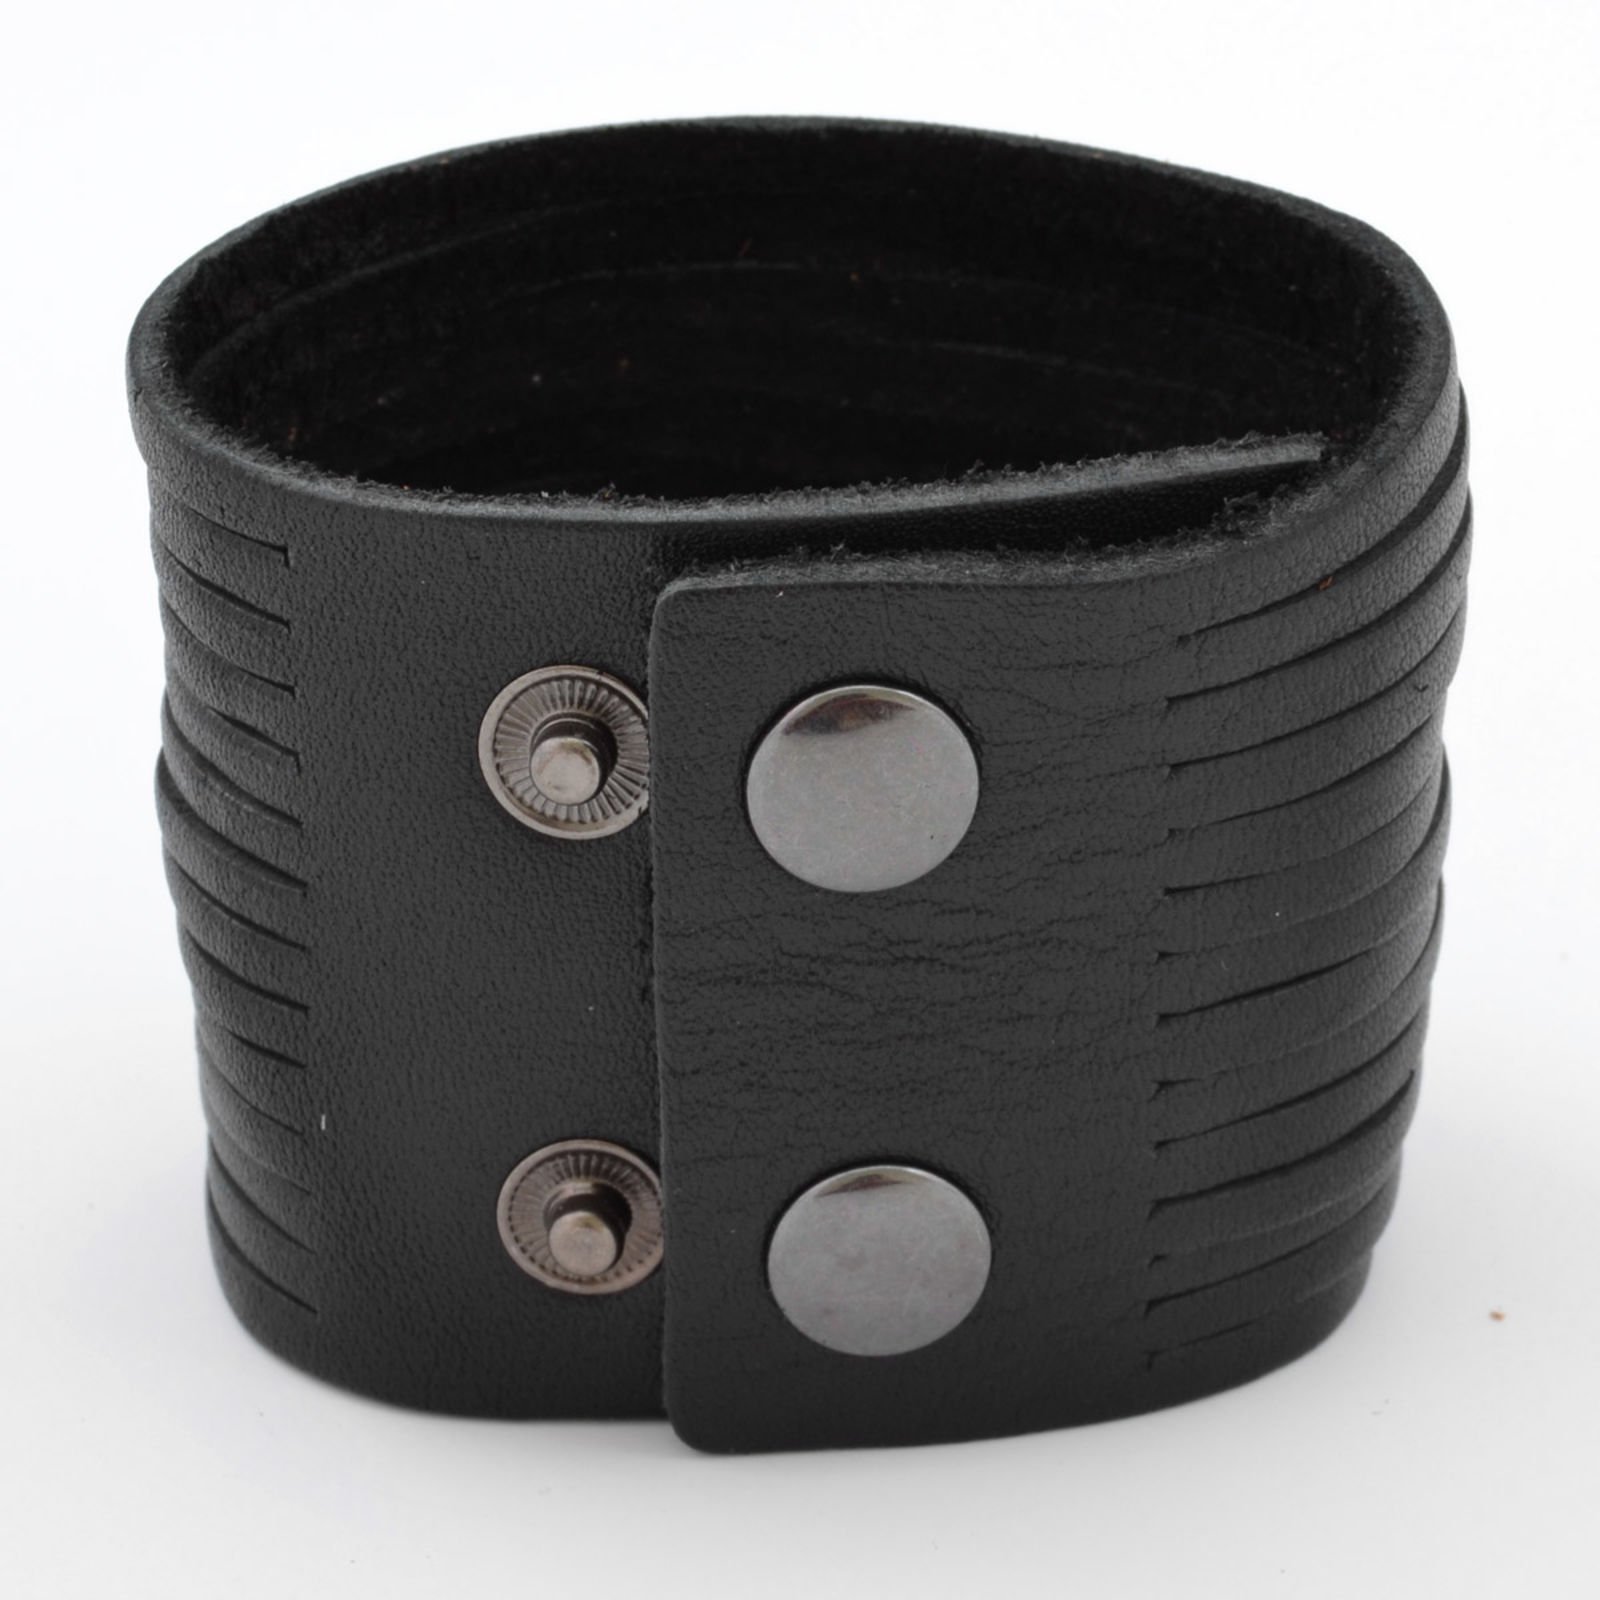 Designer Leather Double Lock Black Men's Bracelet